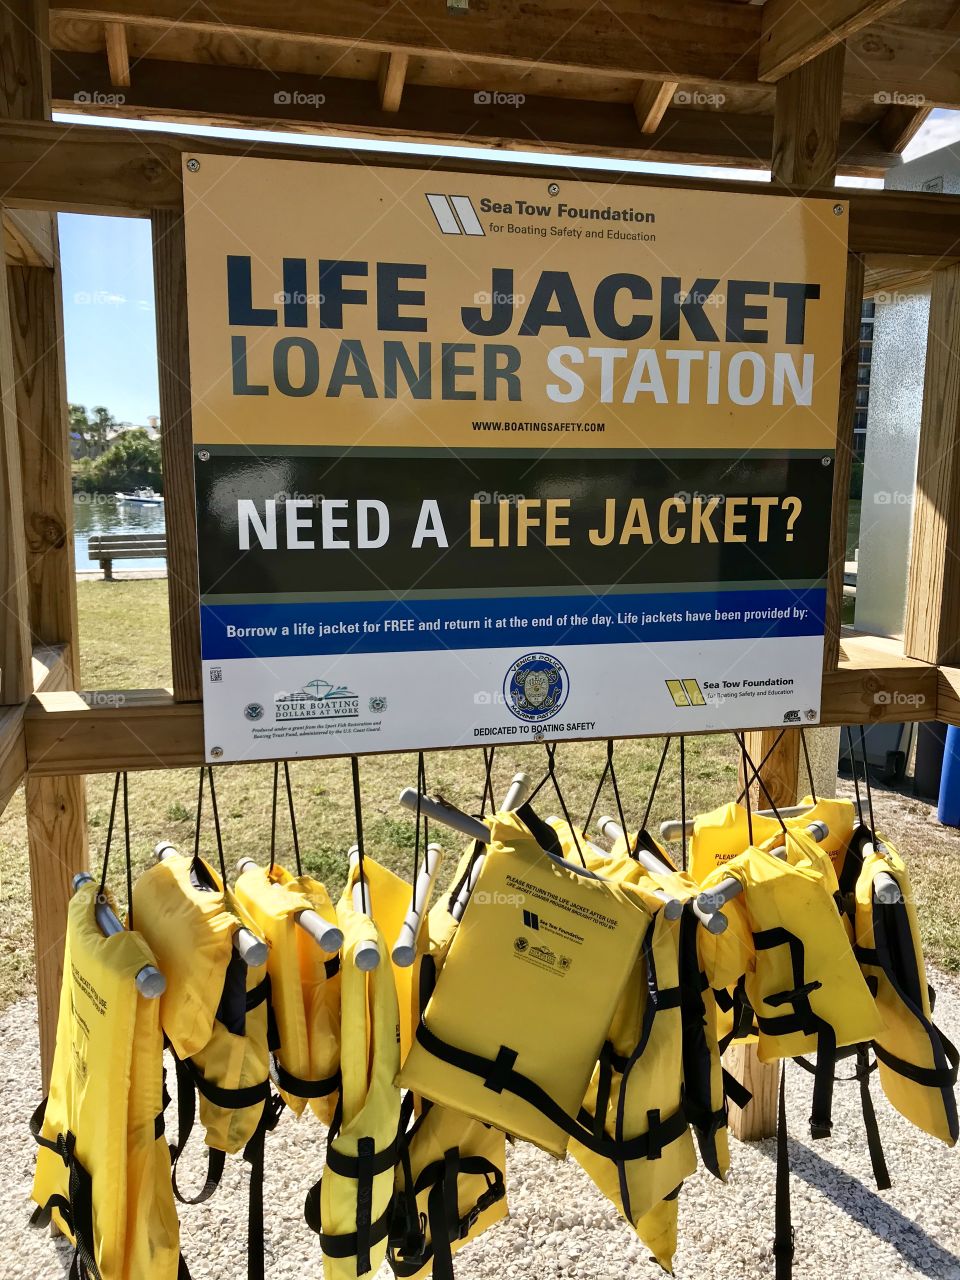 Life jackets loaner station 